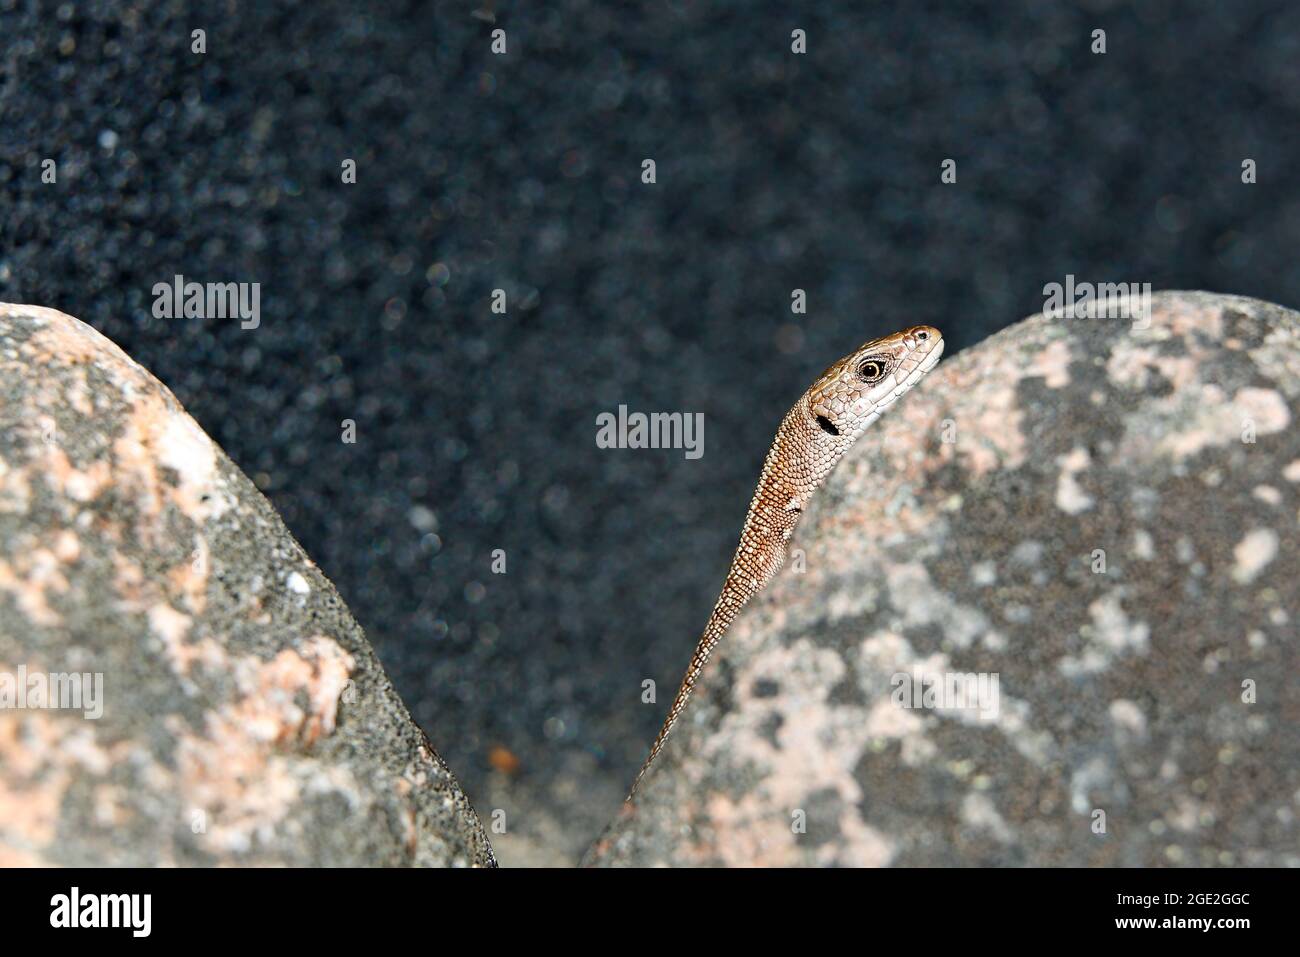 Common lizard warming on a gray stone Stock Photo